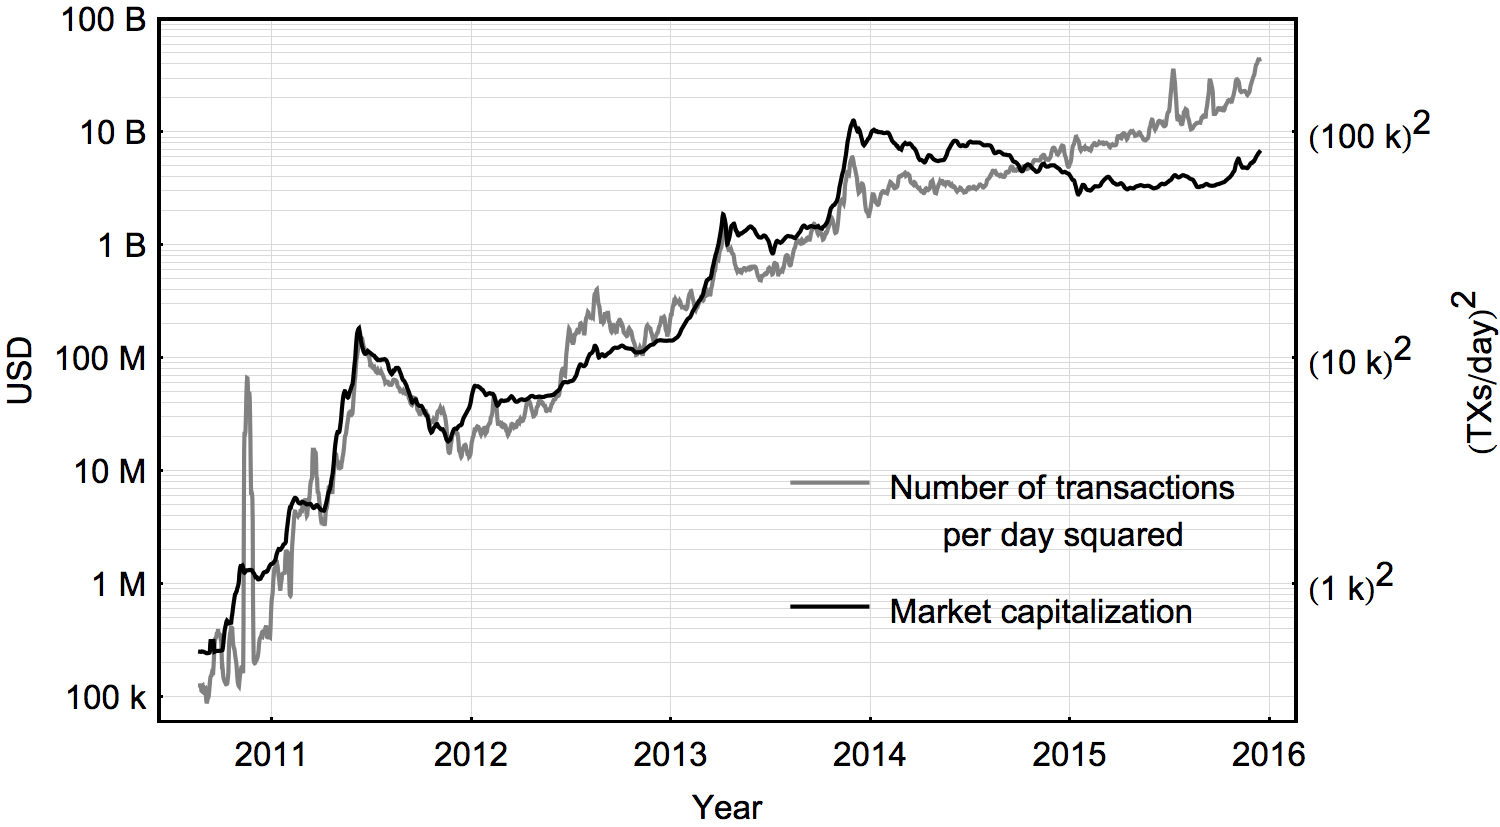 bitcoin market cap vs goldman sachs